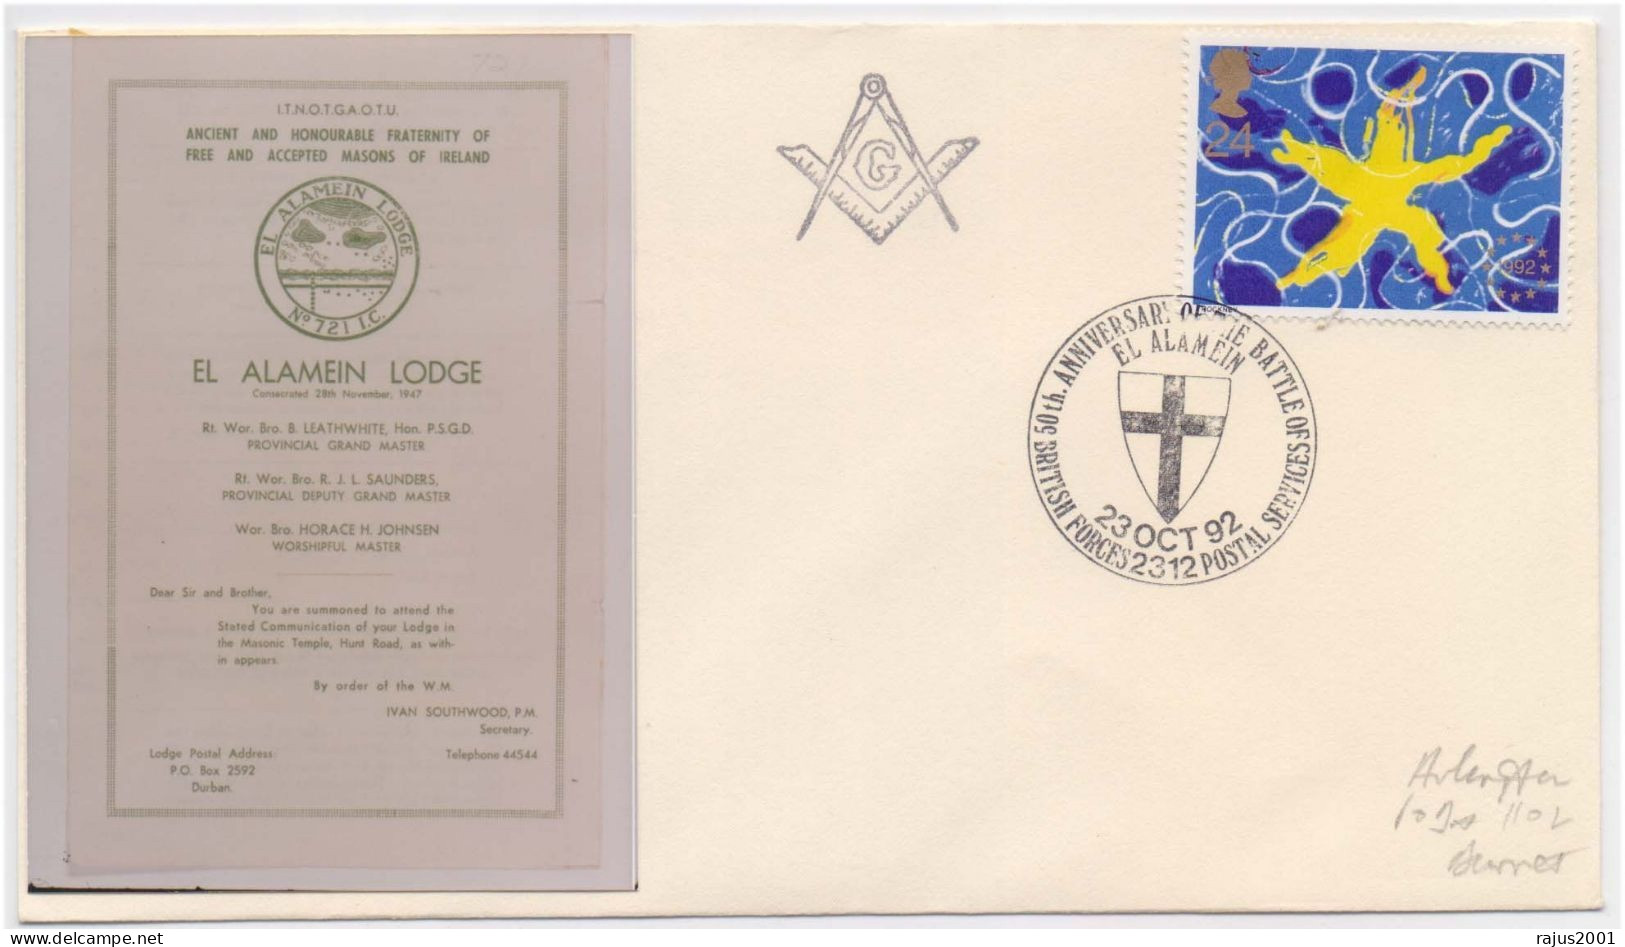 EL Alamein Lodge No. 721 I.C. Masons Of Ireland, Freemasonry Masonic Limited Edition Only 125 Cover Issued - Vrijmetselarij